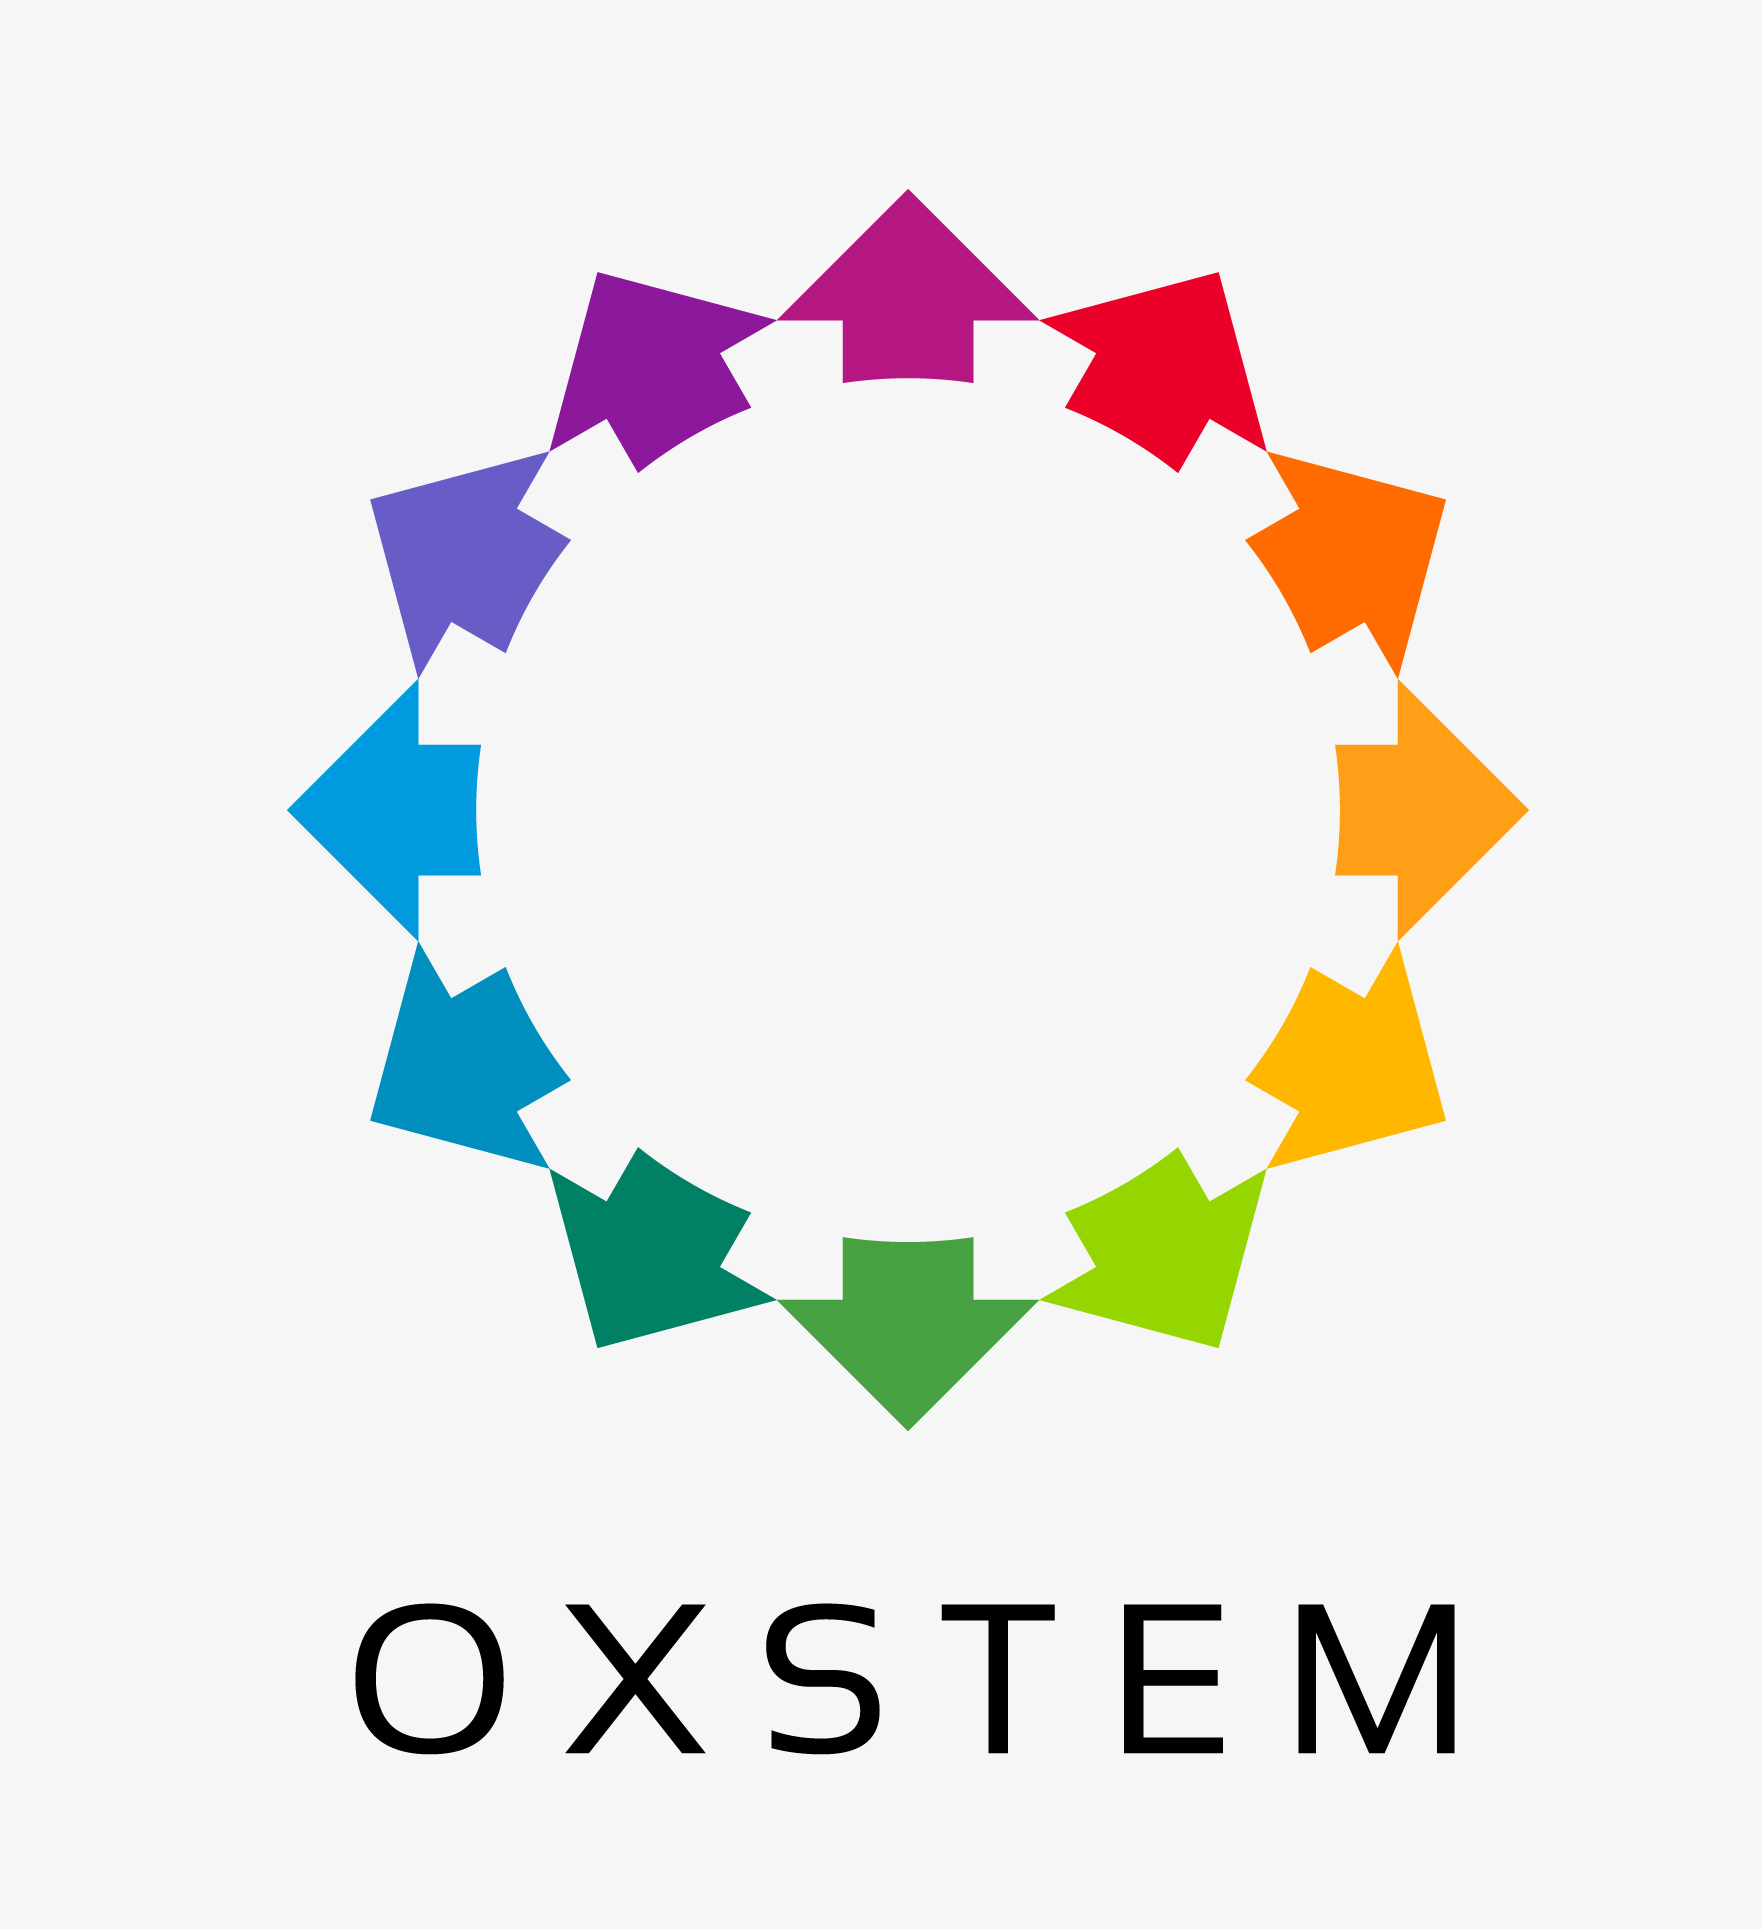 Oxstem logo